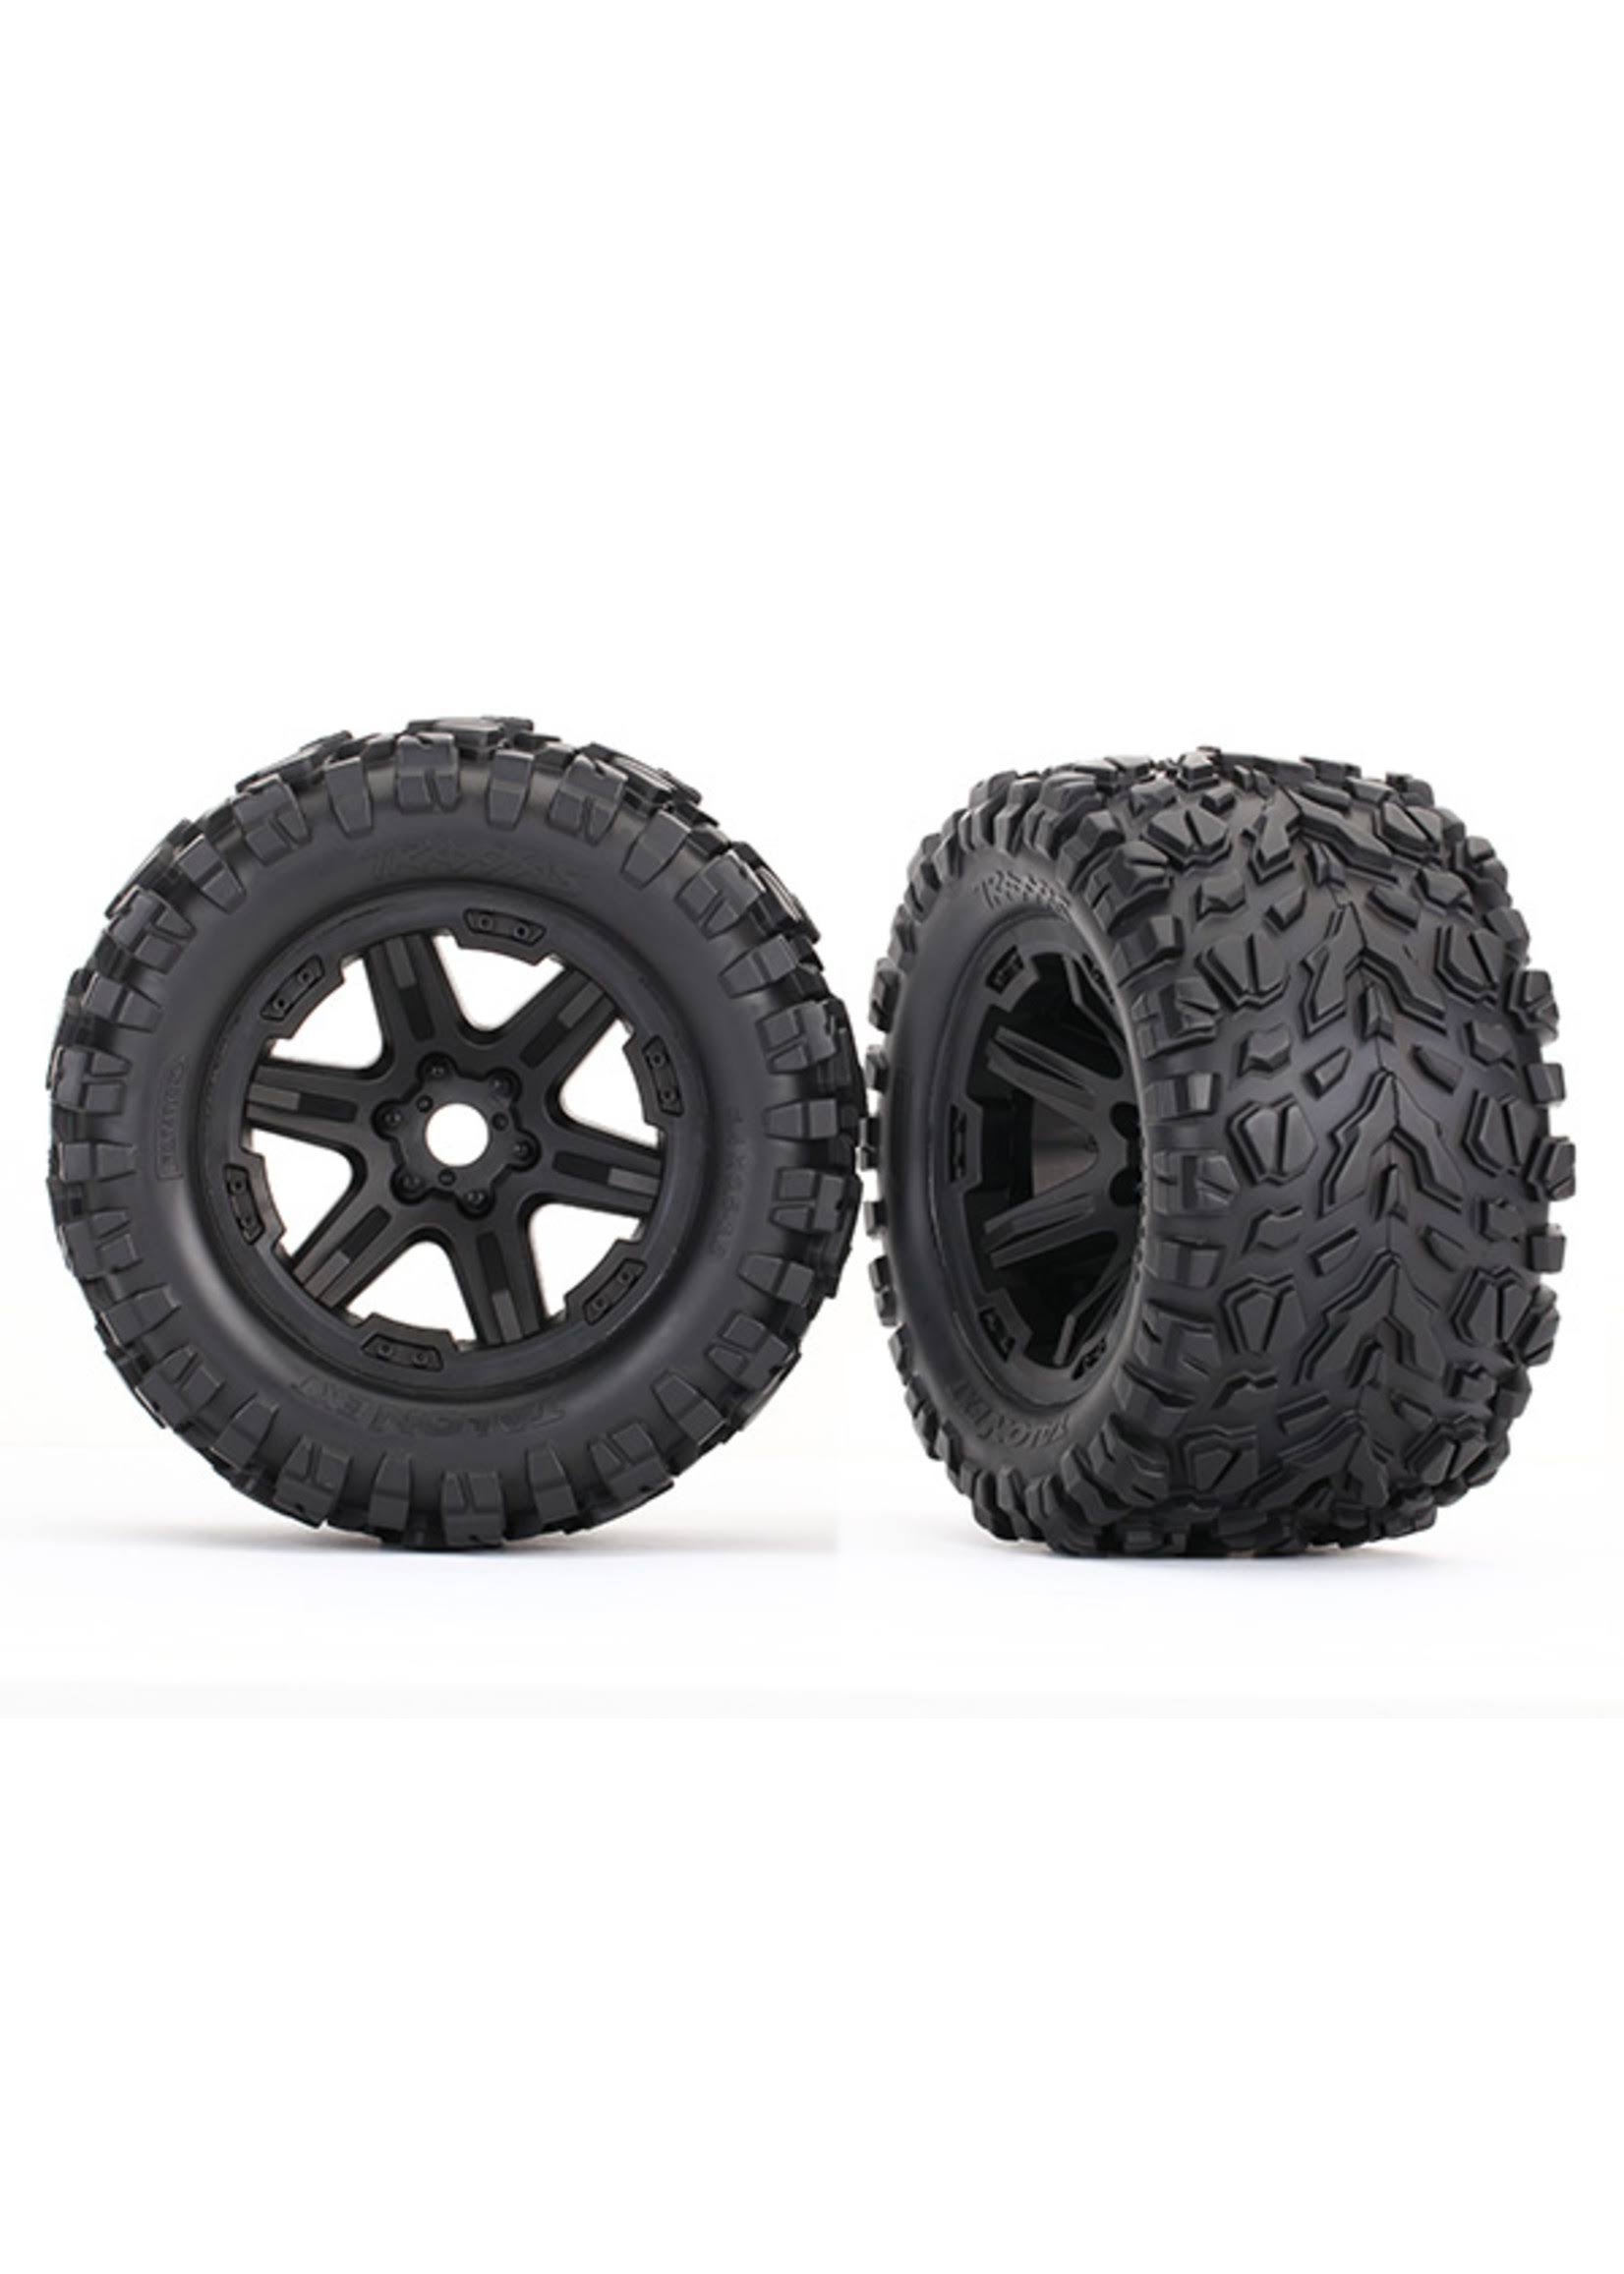 Traxxas Tires Wheels Assembled Black Talon Ext Tires 2 17mm TRX8672